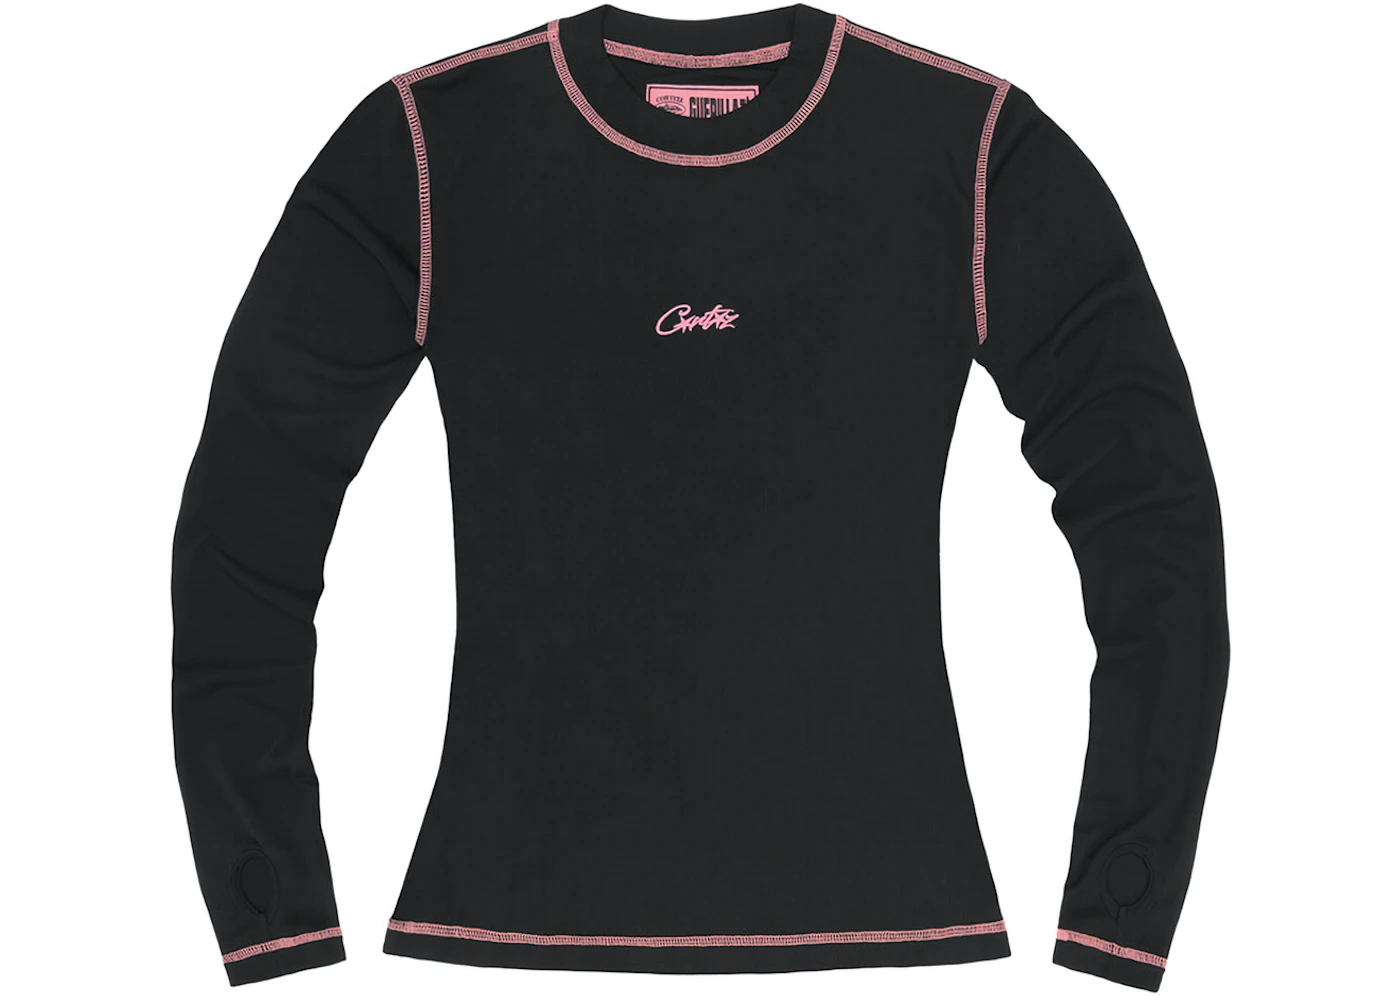 Corteiz Women's Mesh Longsleeve Black/Pink